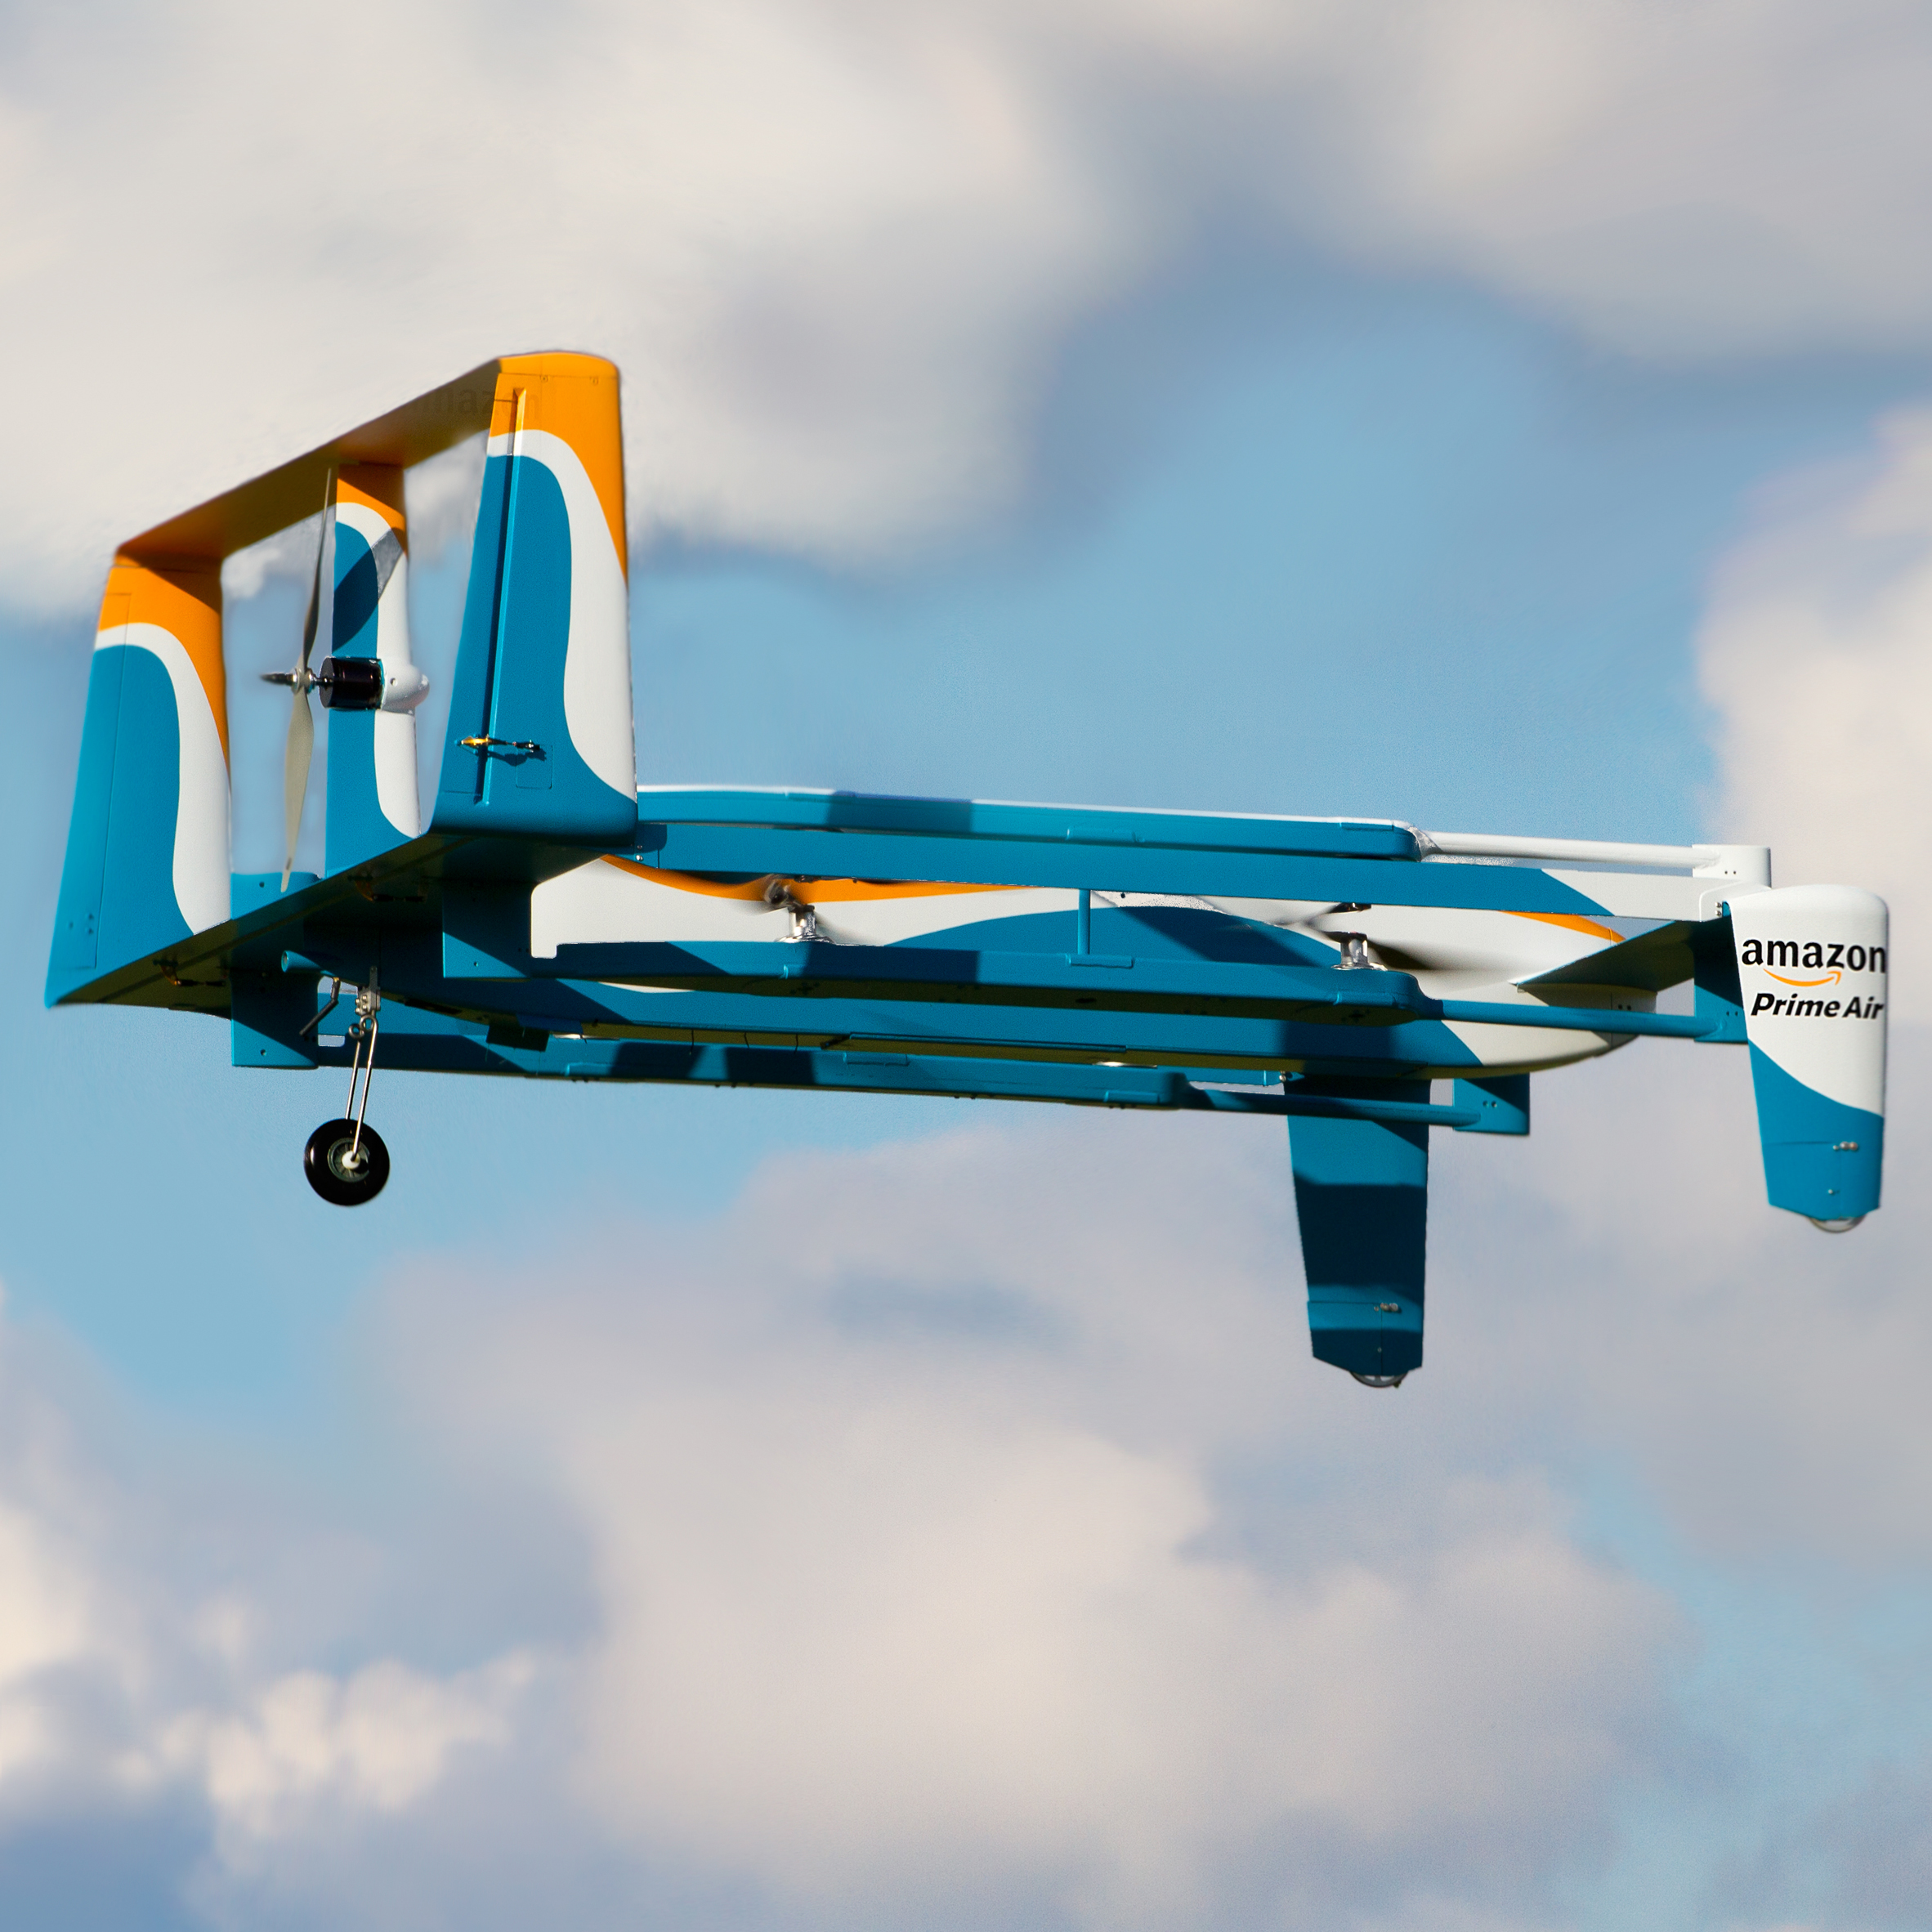 Amazon's Prime Air delivery drone.